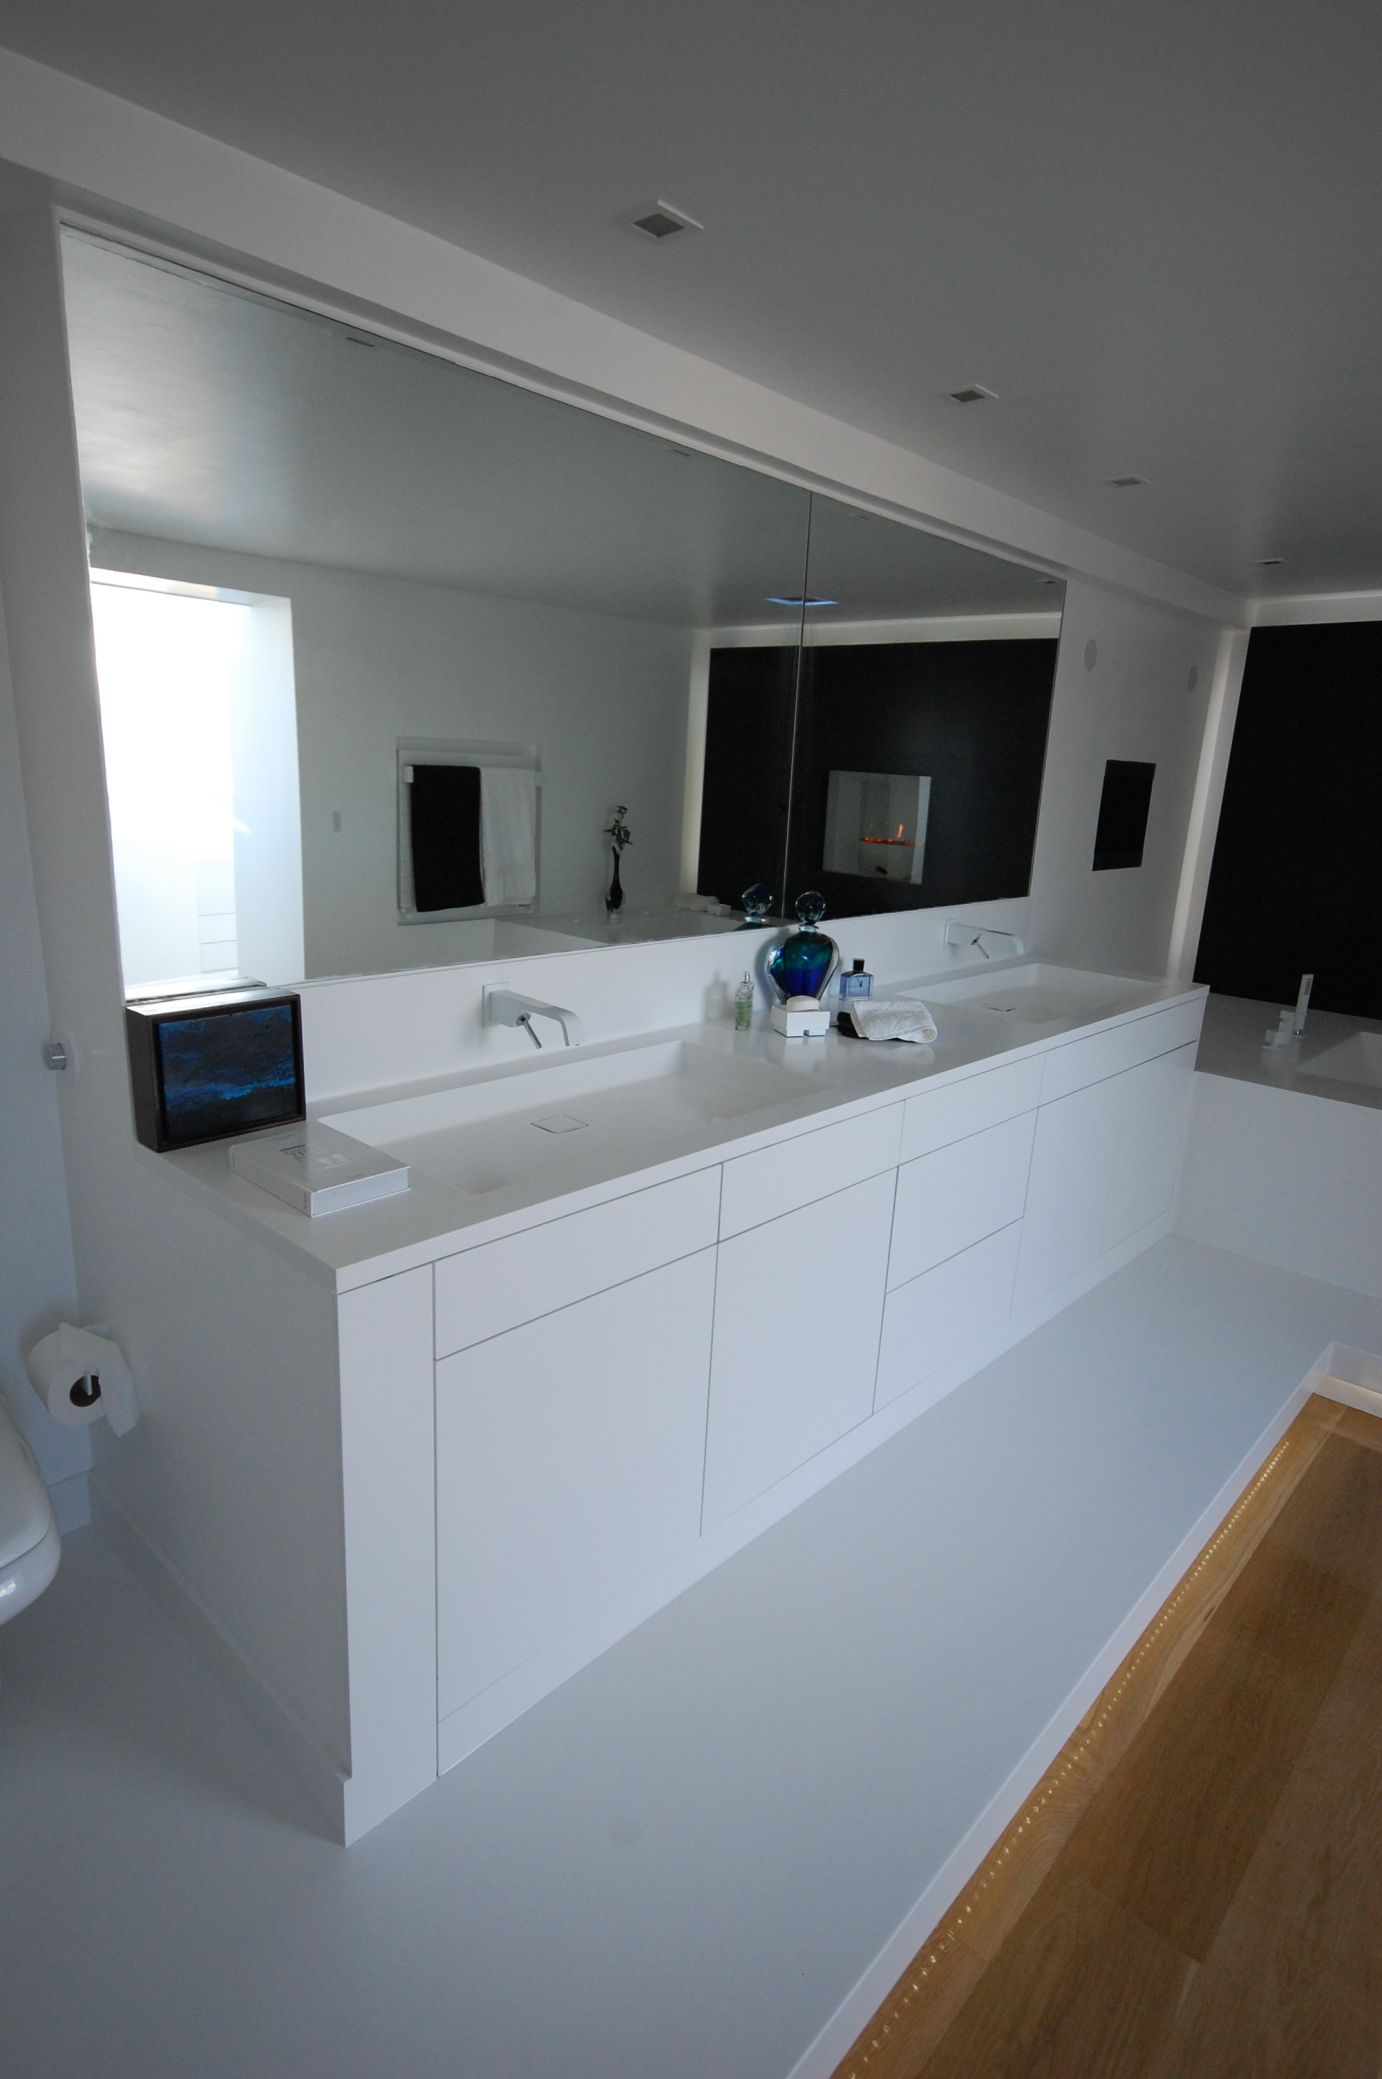 Large Bespoke Bath And Bathroom, Made To Measure Bathroom Vanity Tops